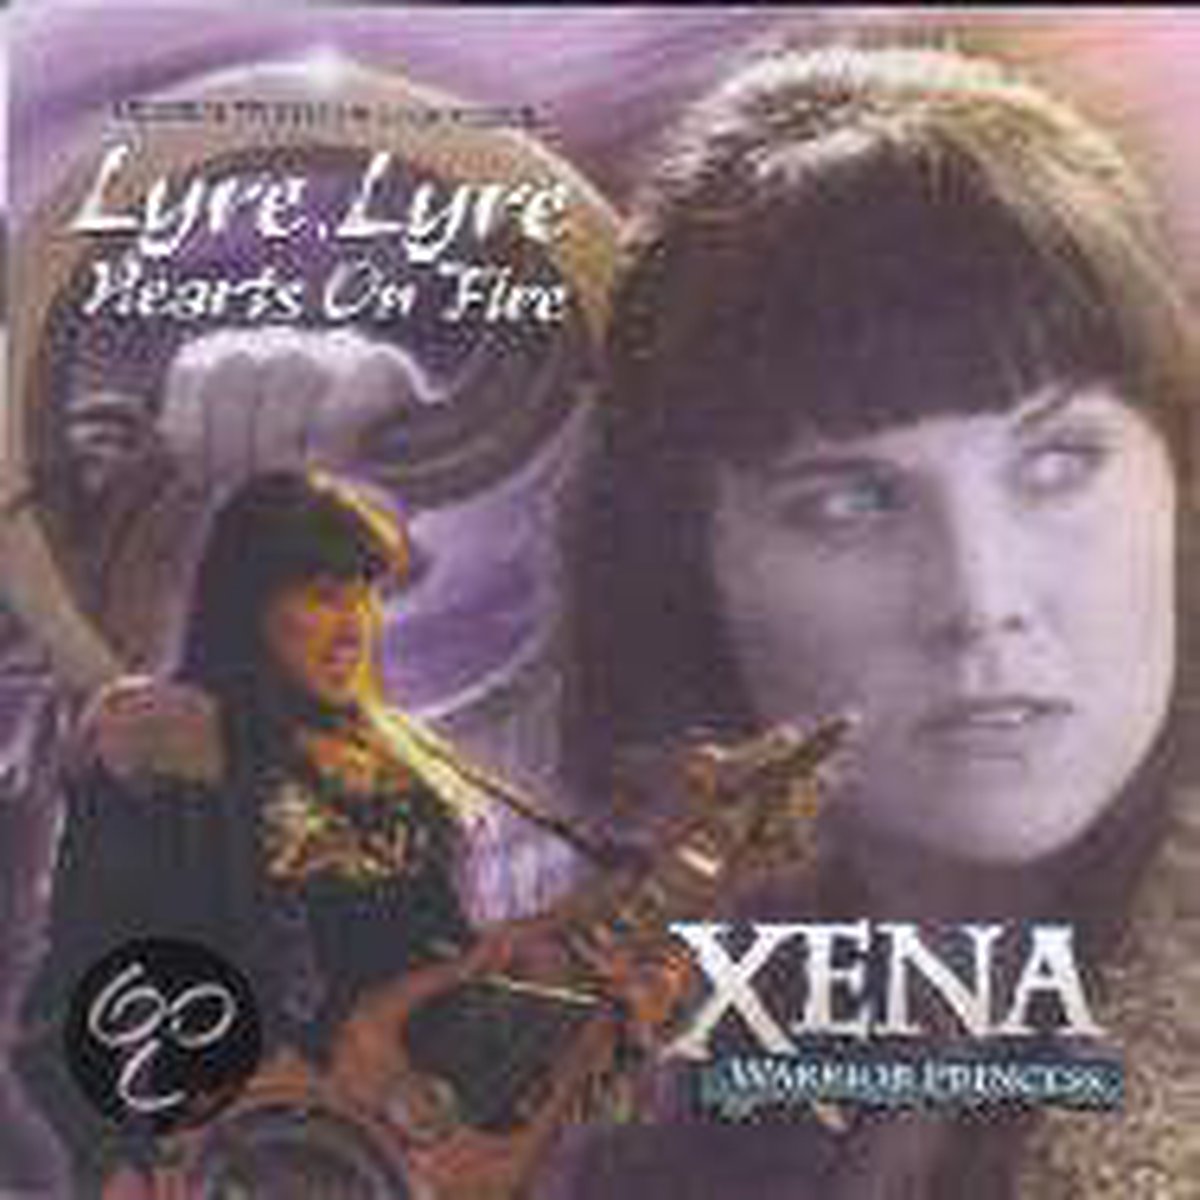 Xena: Warrior Princess: Lyre, Lyre Hearts On Fire - Joseph Loduca